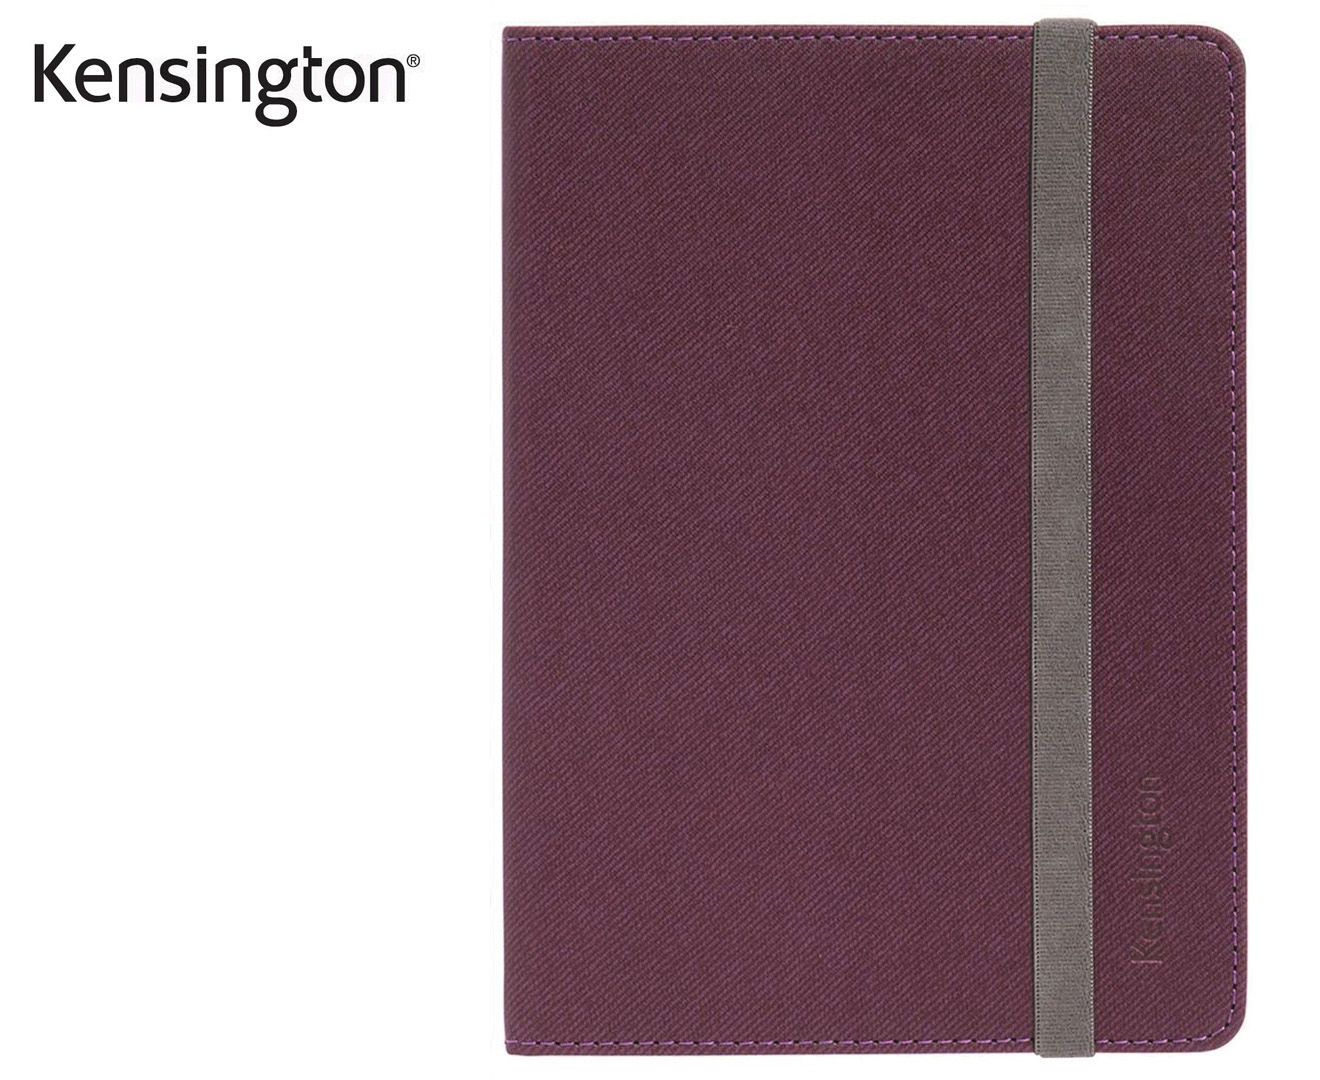 Kensington Folio Case for Kindle - Burgundy/Grey